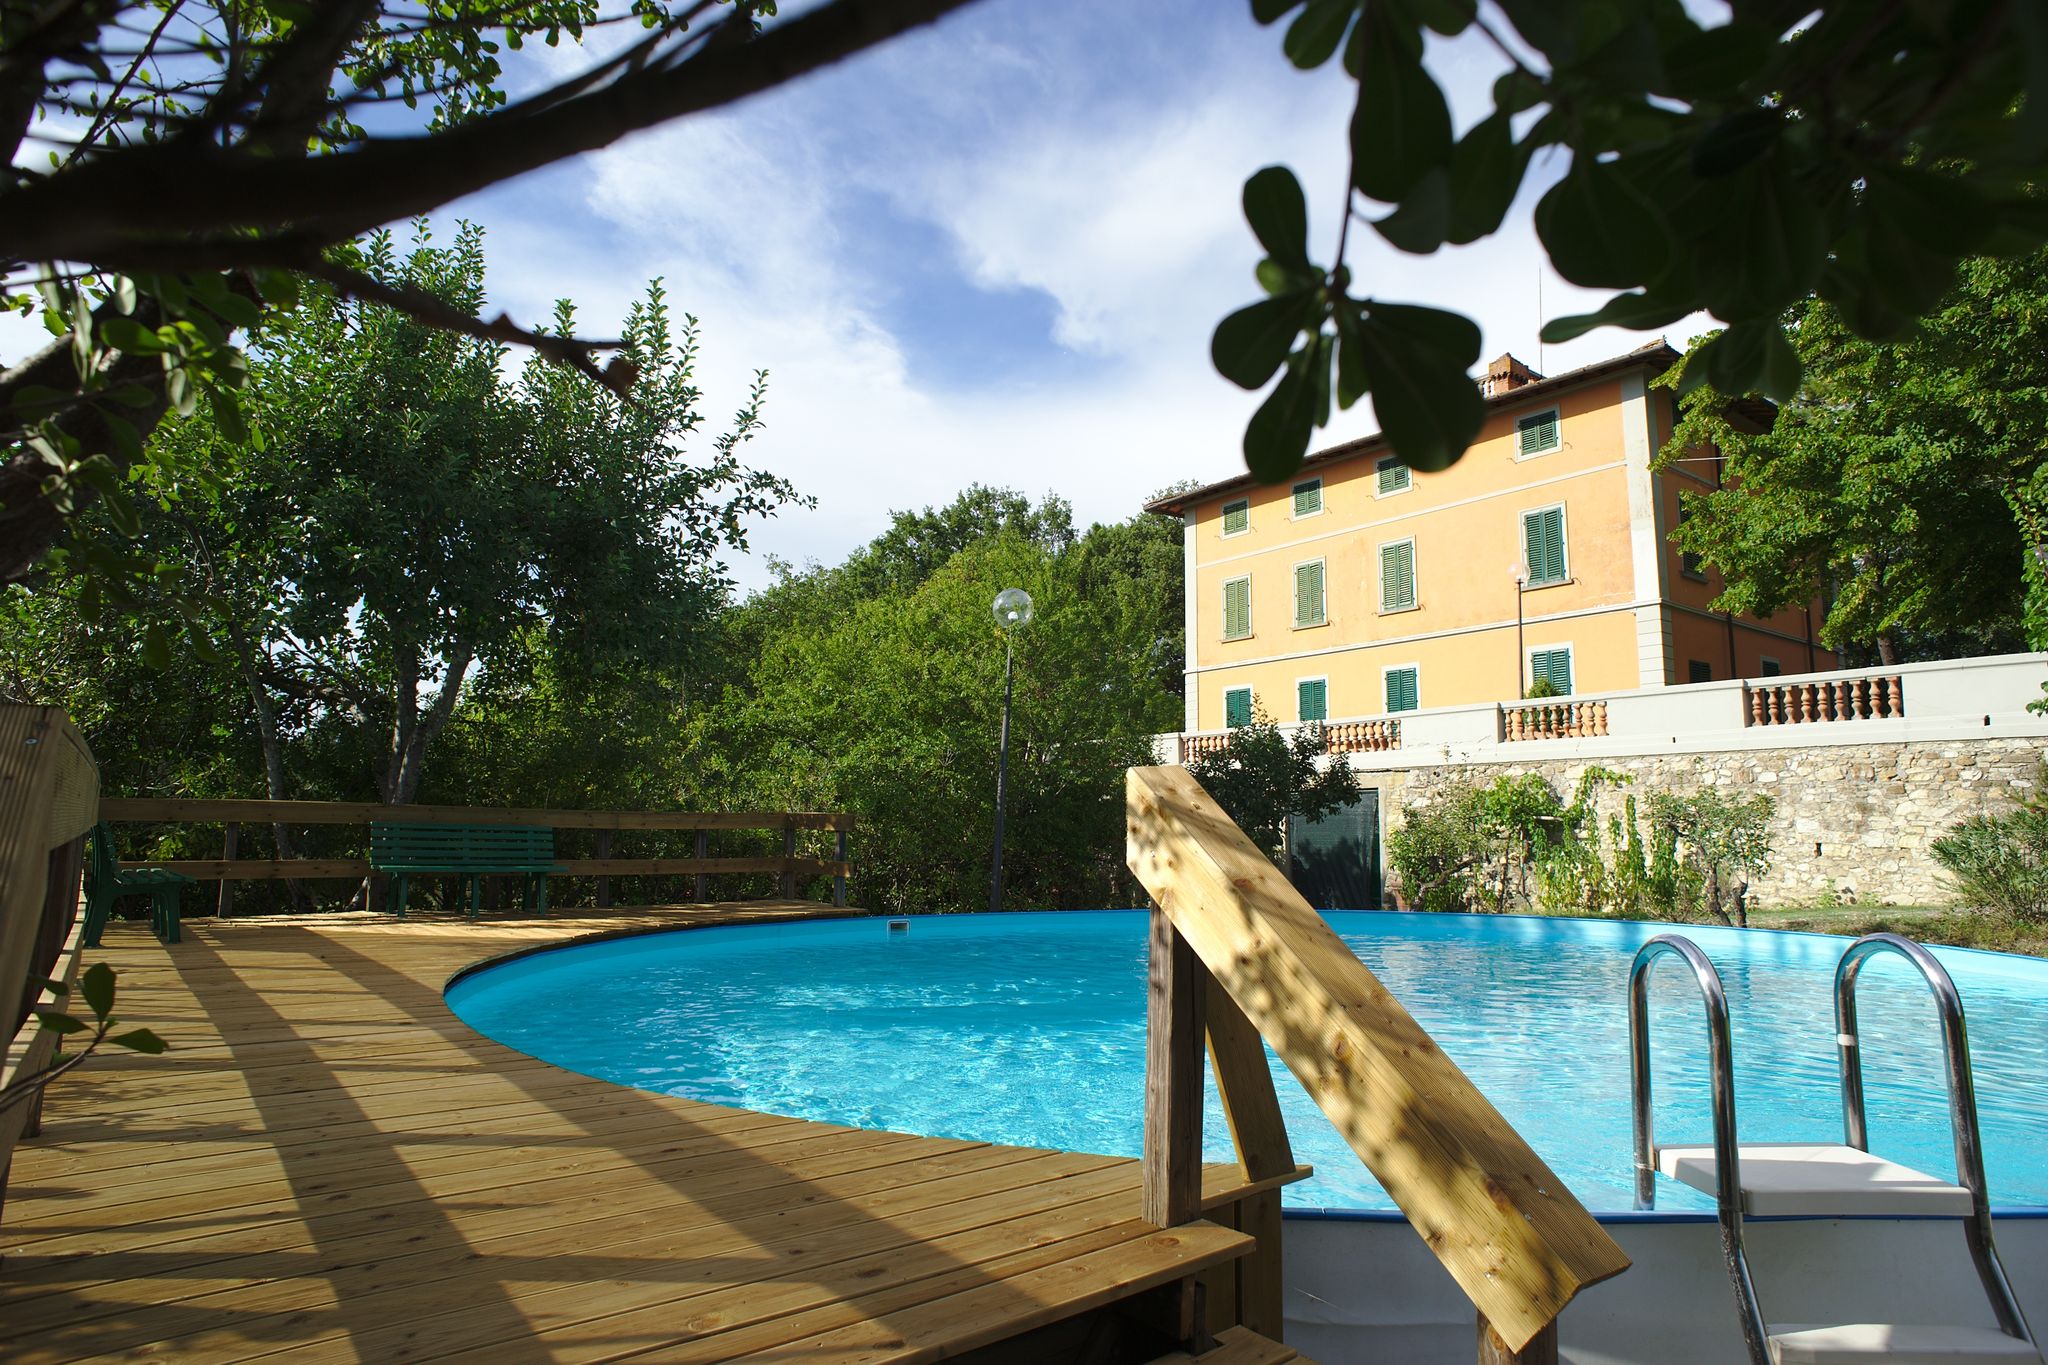 Maison de vacances moderne à Montefiridolfi avec piscine